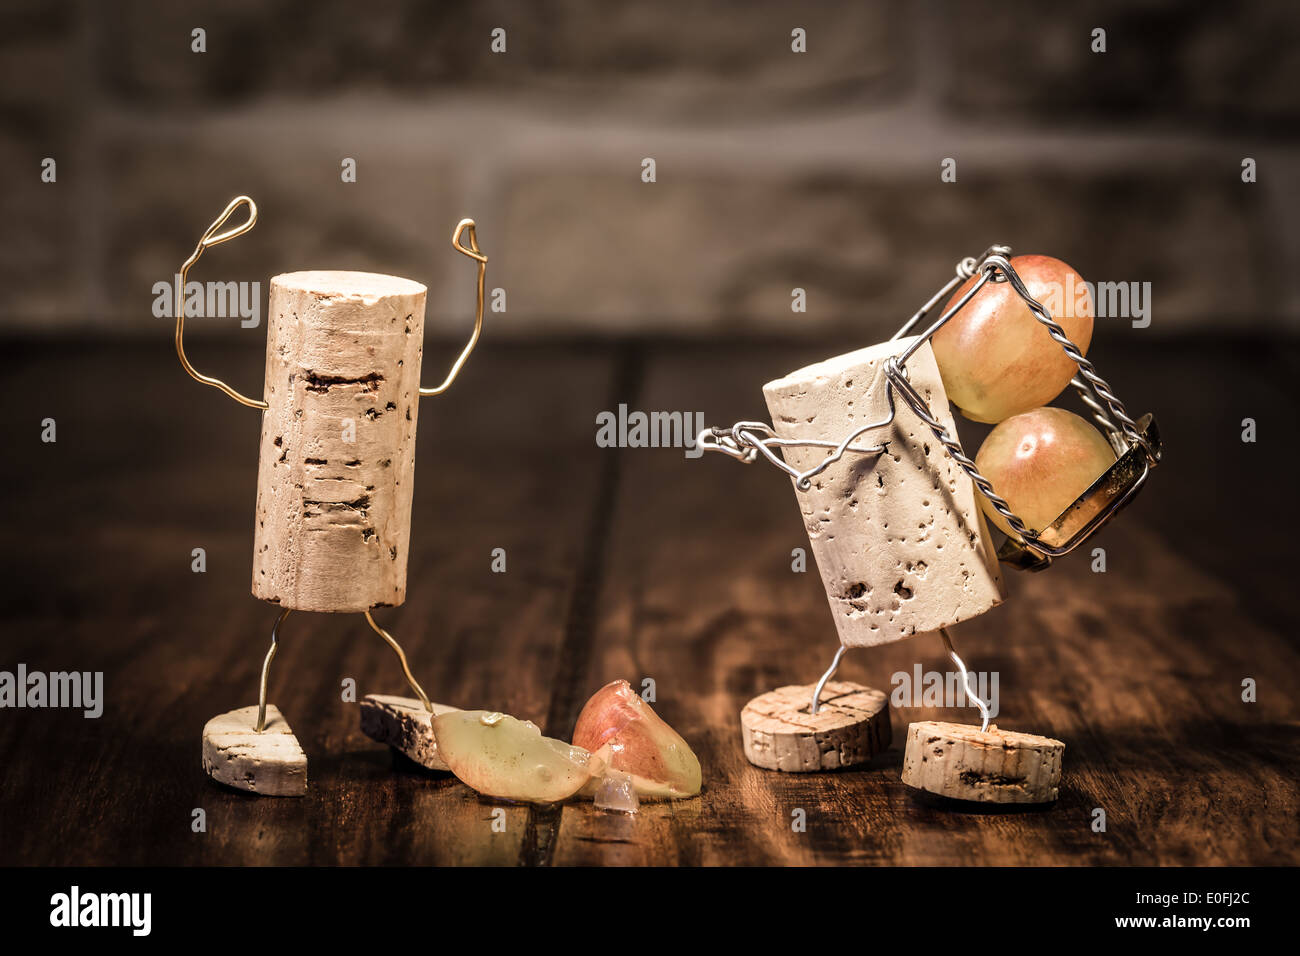 Concept Trouble between boss and employee, wine cork figures Stock Photo